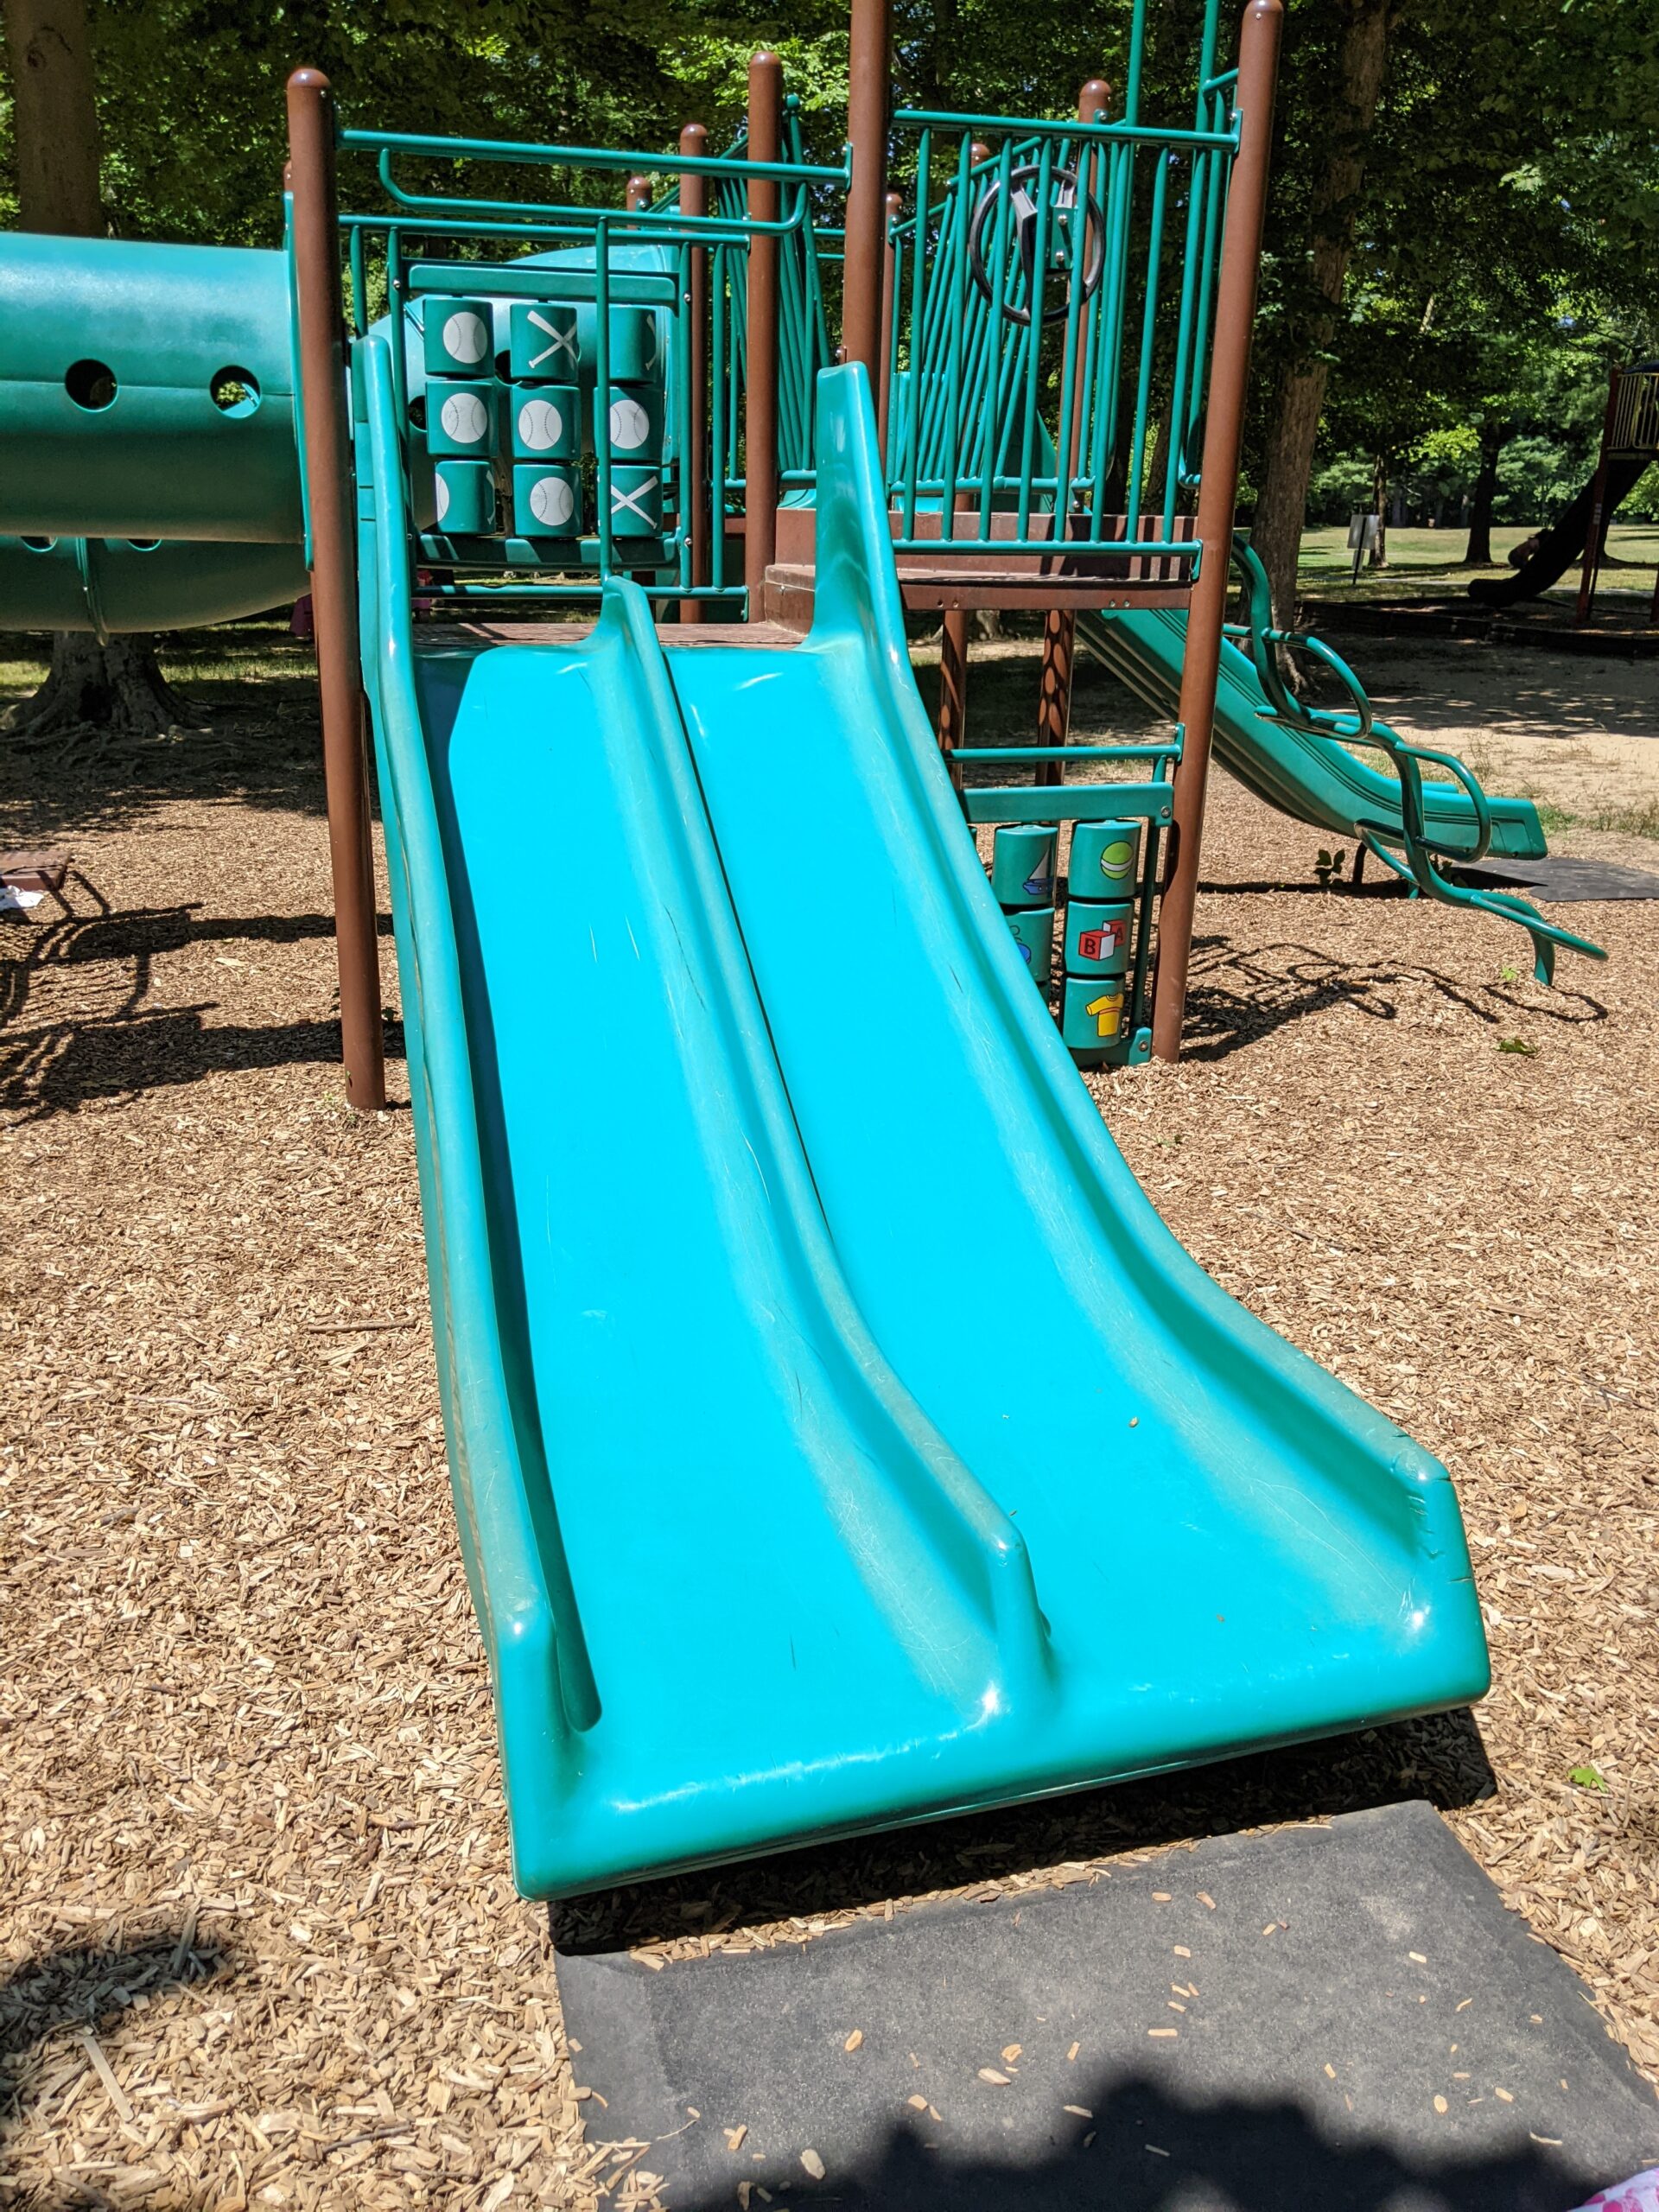 Children's Park Playground at Veteran's Park in Hamilton Township NJ - SLIDES - side by side straight green slides on green playground